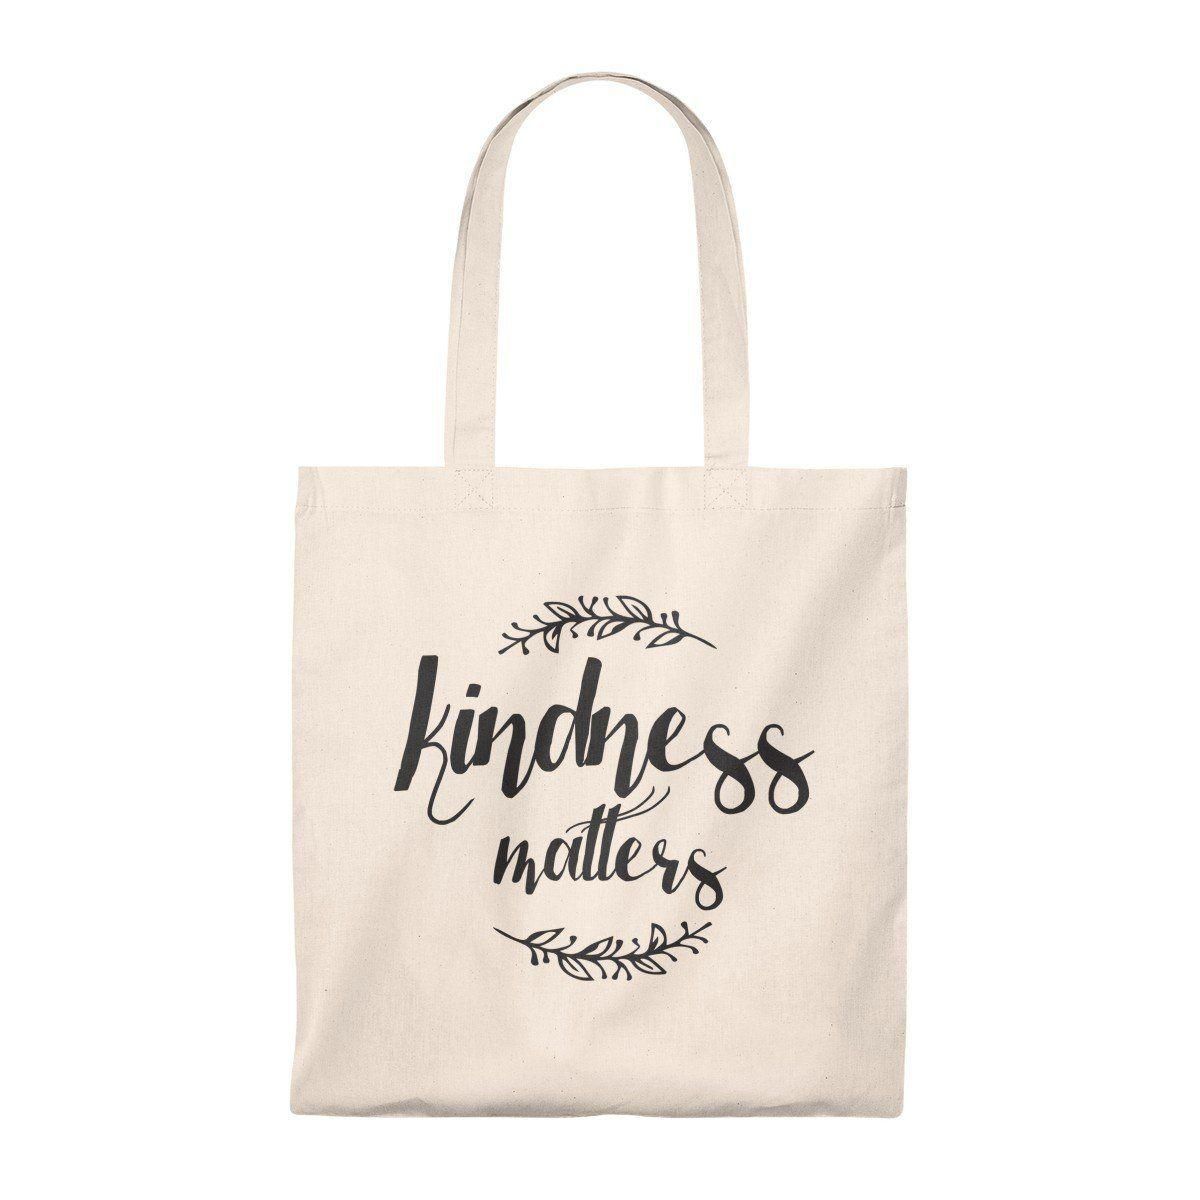 Kindness Matters Design Printed Tote Bag